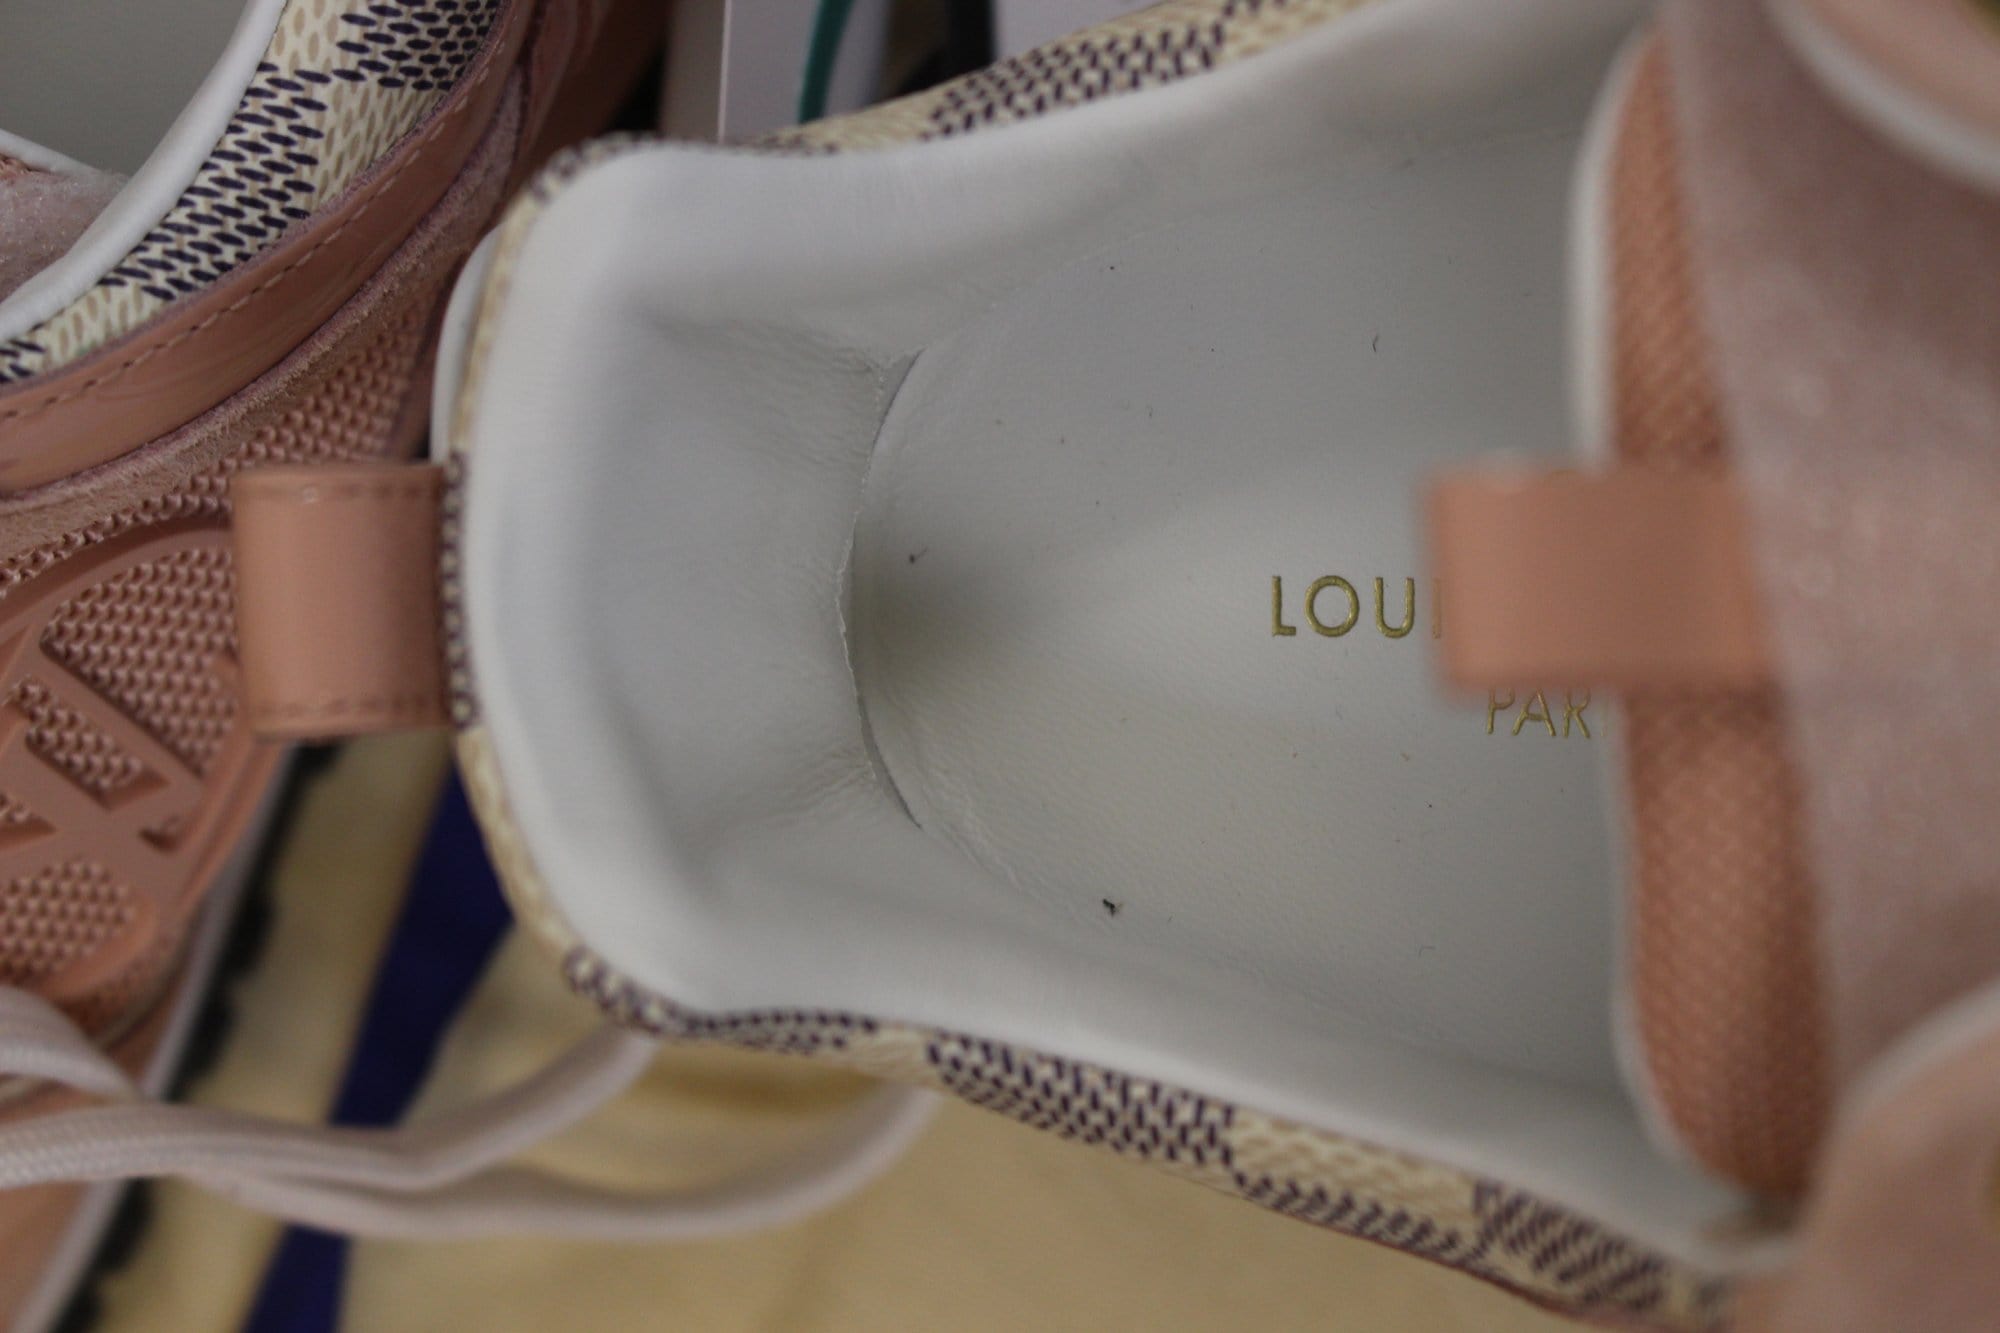 LOUIS VUITTON Nubuck Suede Run Away Sneakers 36.5 Pink 186926